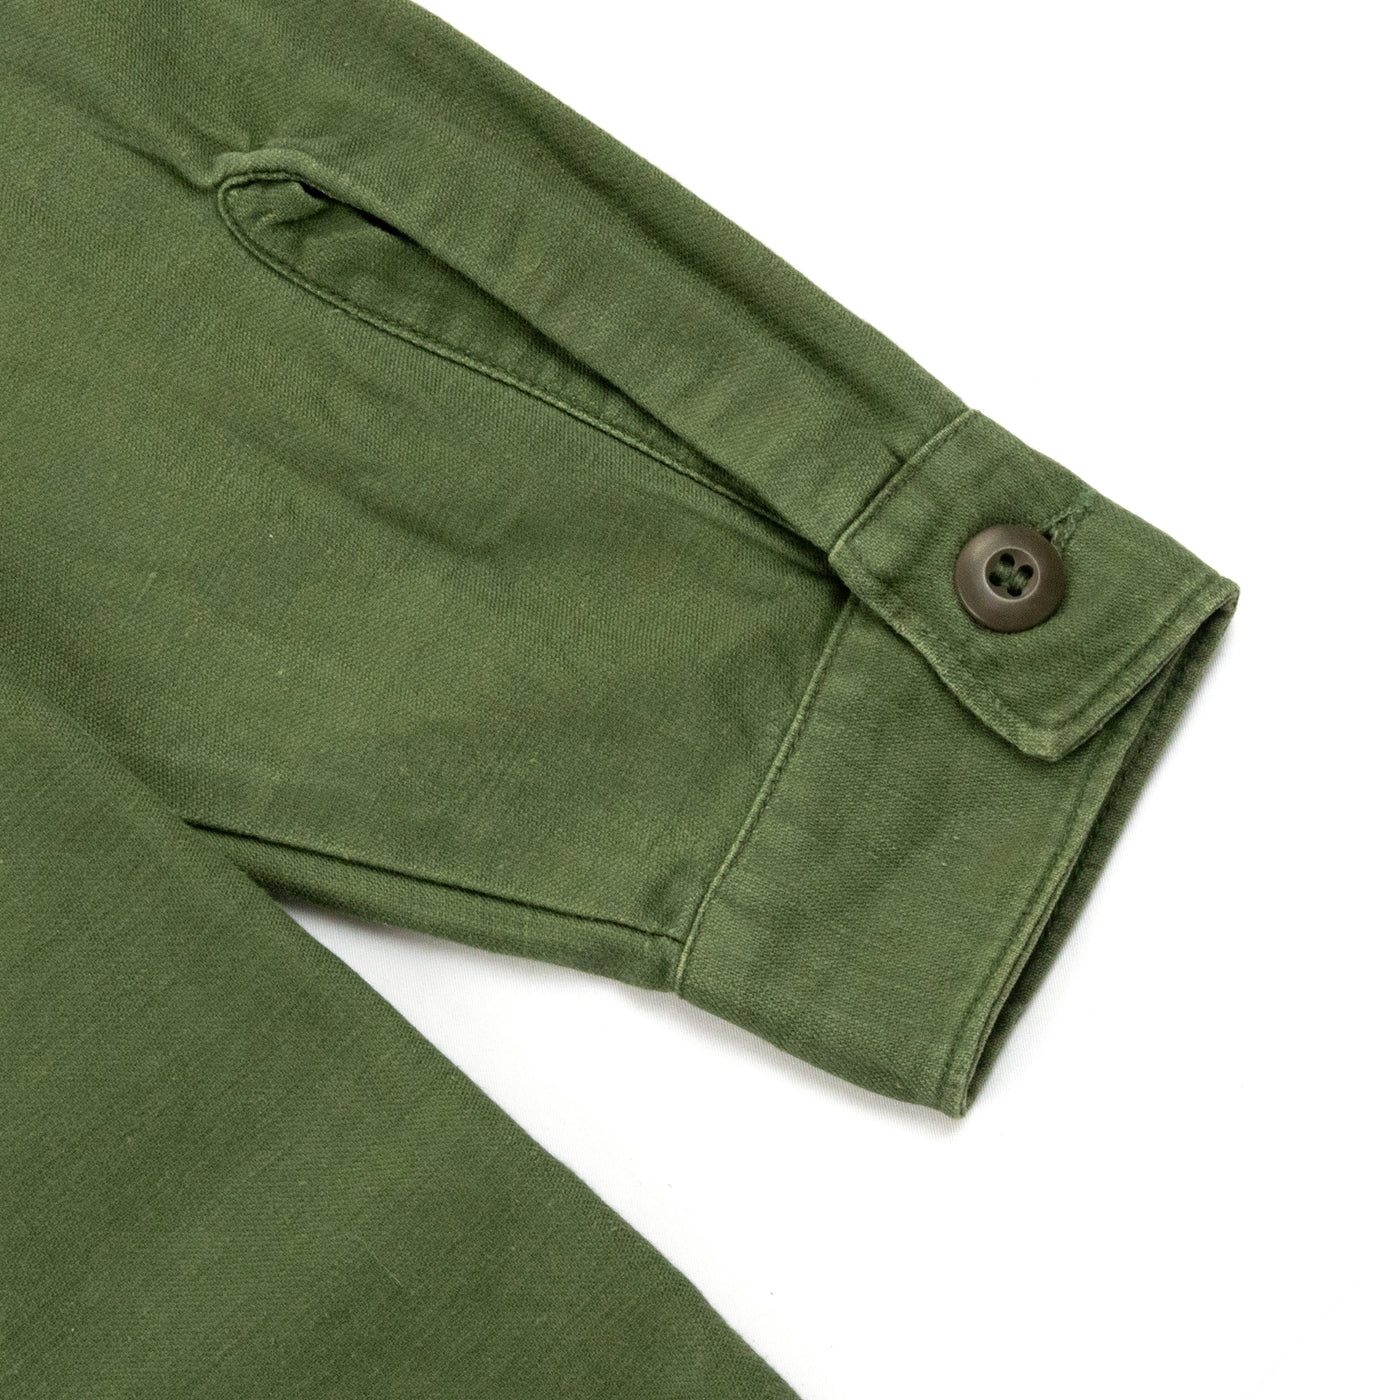 Vintage 60s USMC Vietnam Era Man's Cotton Sateen Army Green 107 Military Shirt S / M CUFF